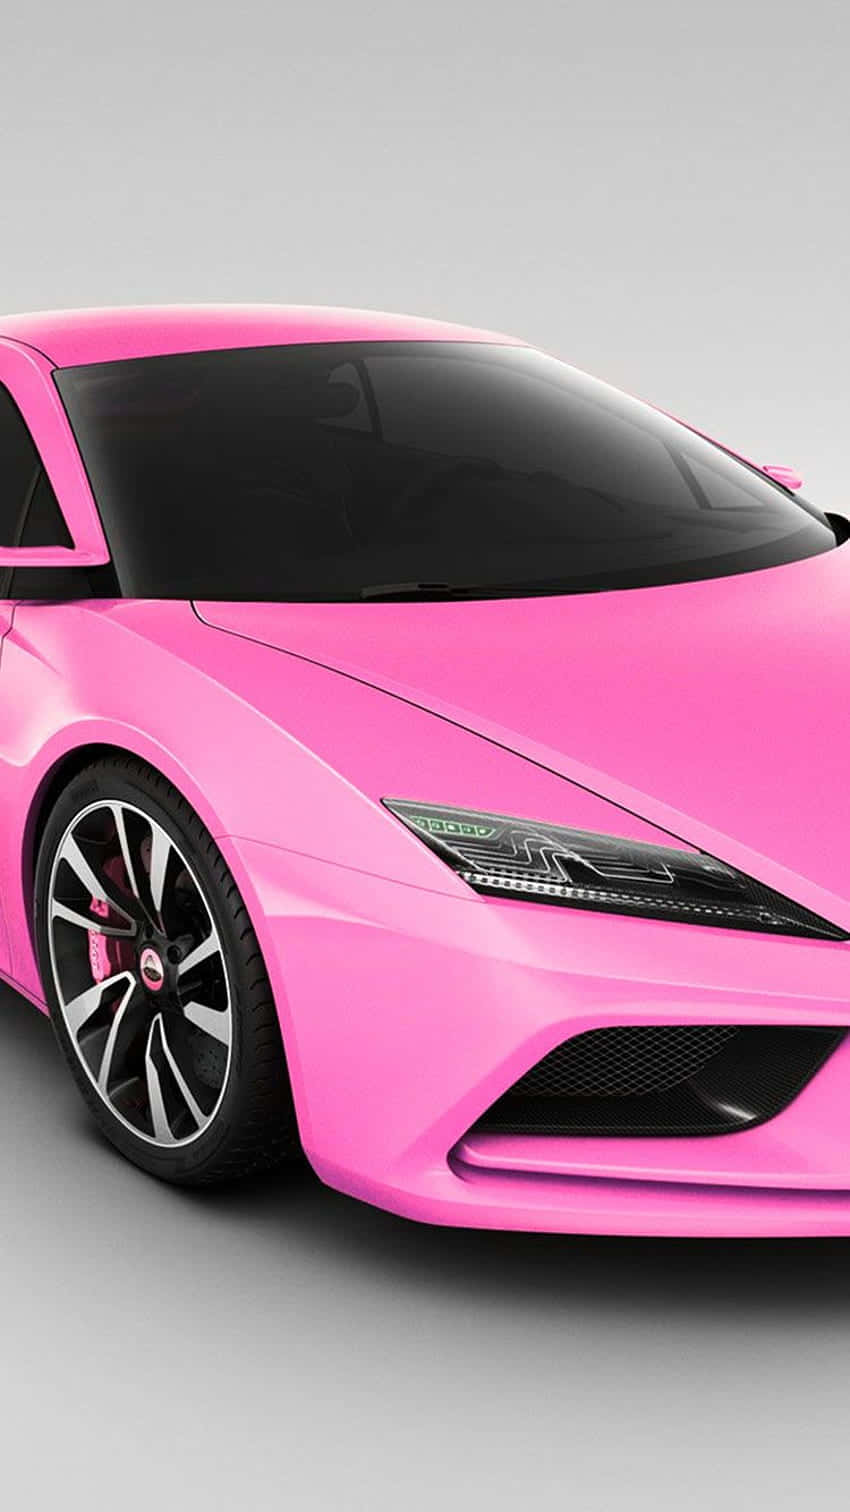 A Pink Lamborghini Sports Car Is Shown In A 3d Rendering Wallpaper